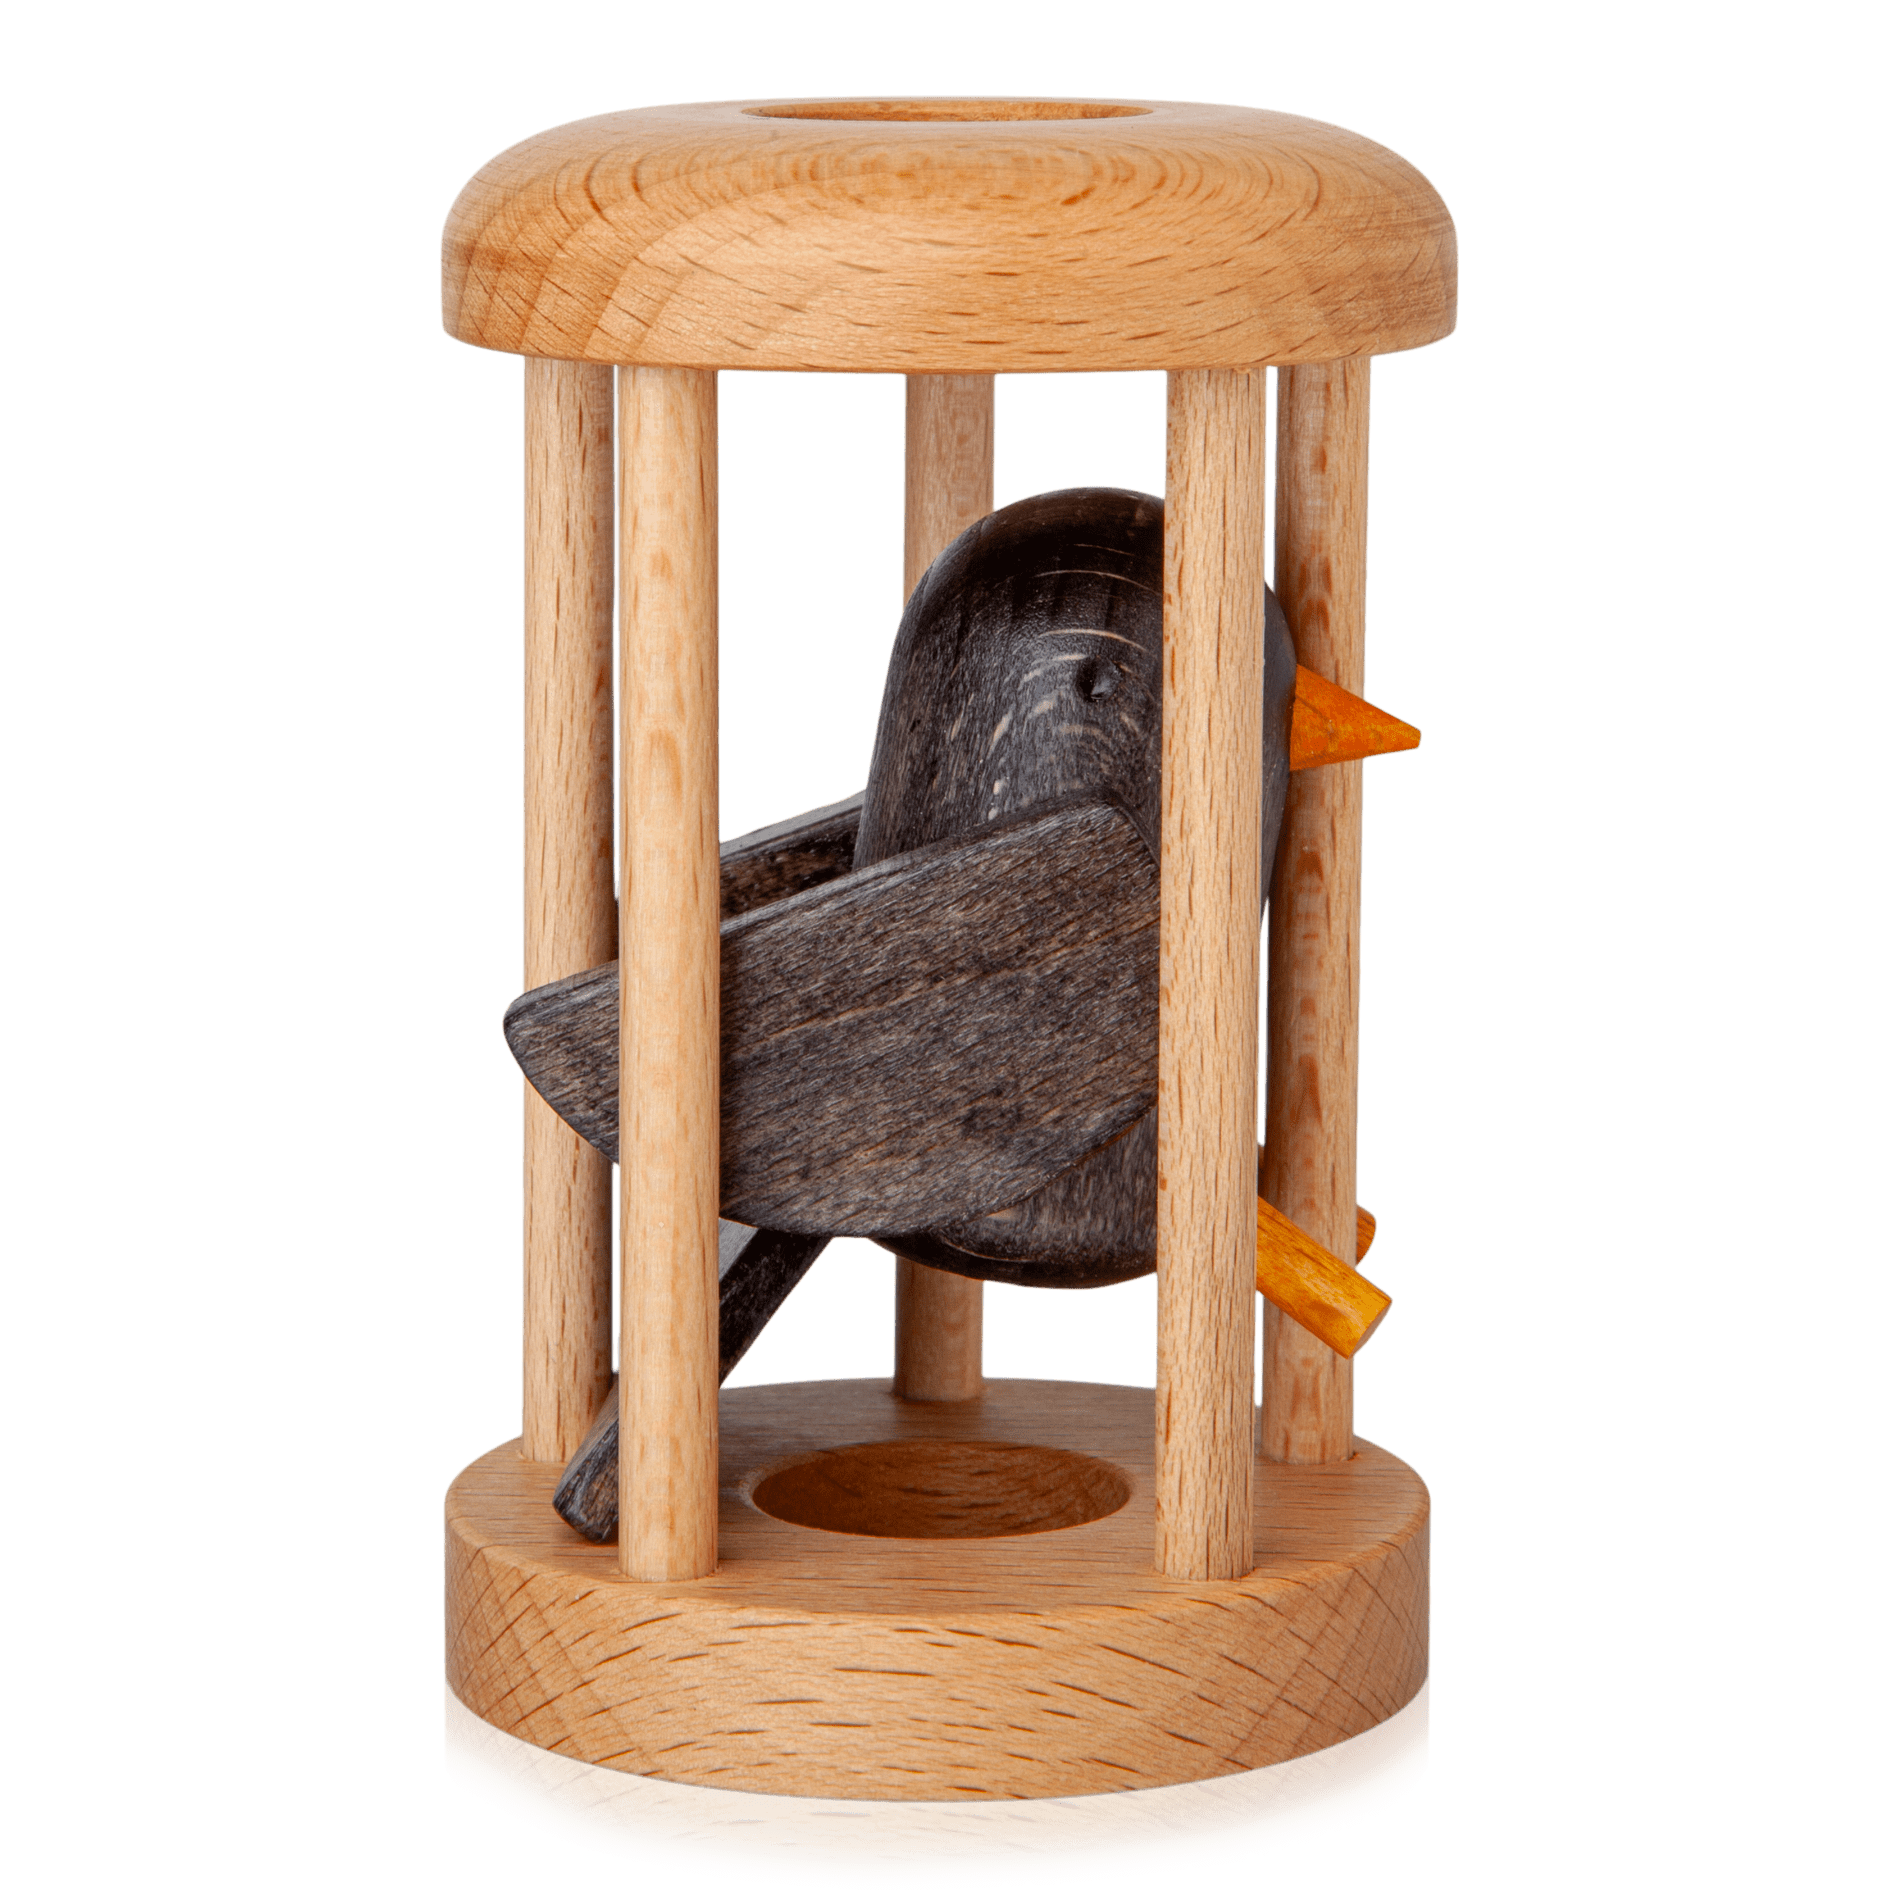 Bird in Cage Puzzle